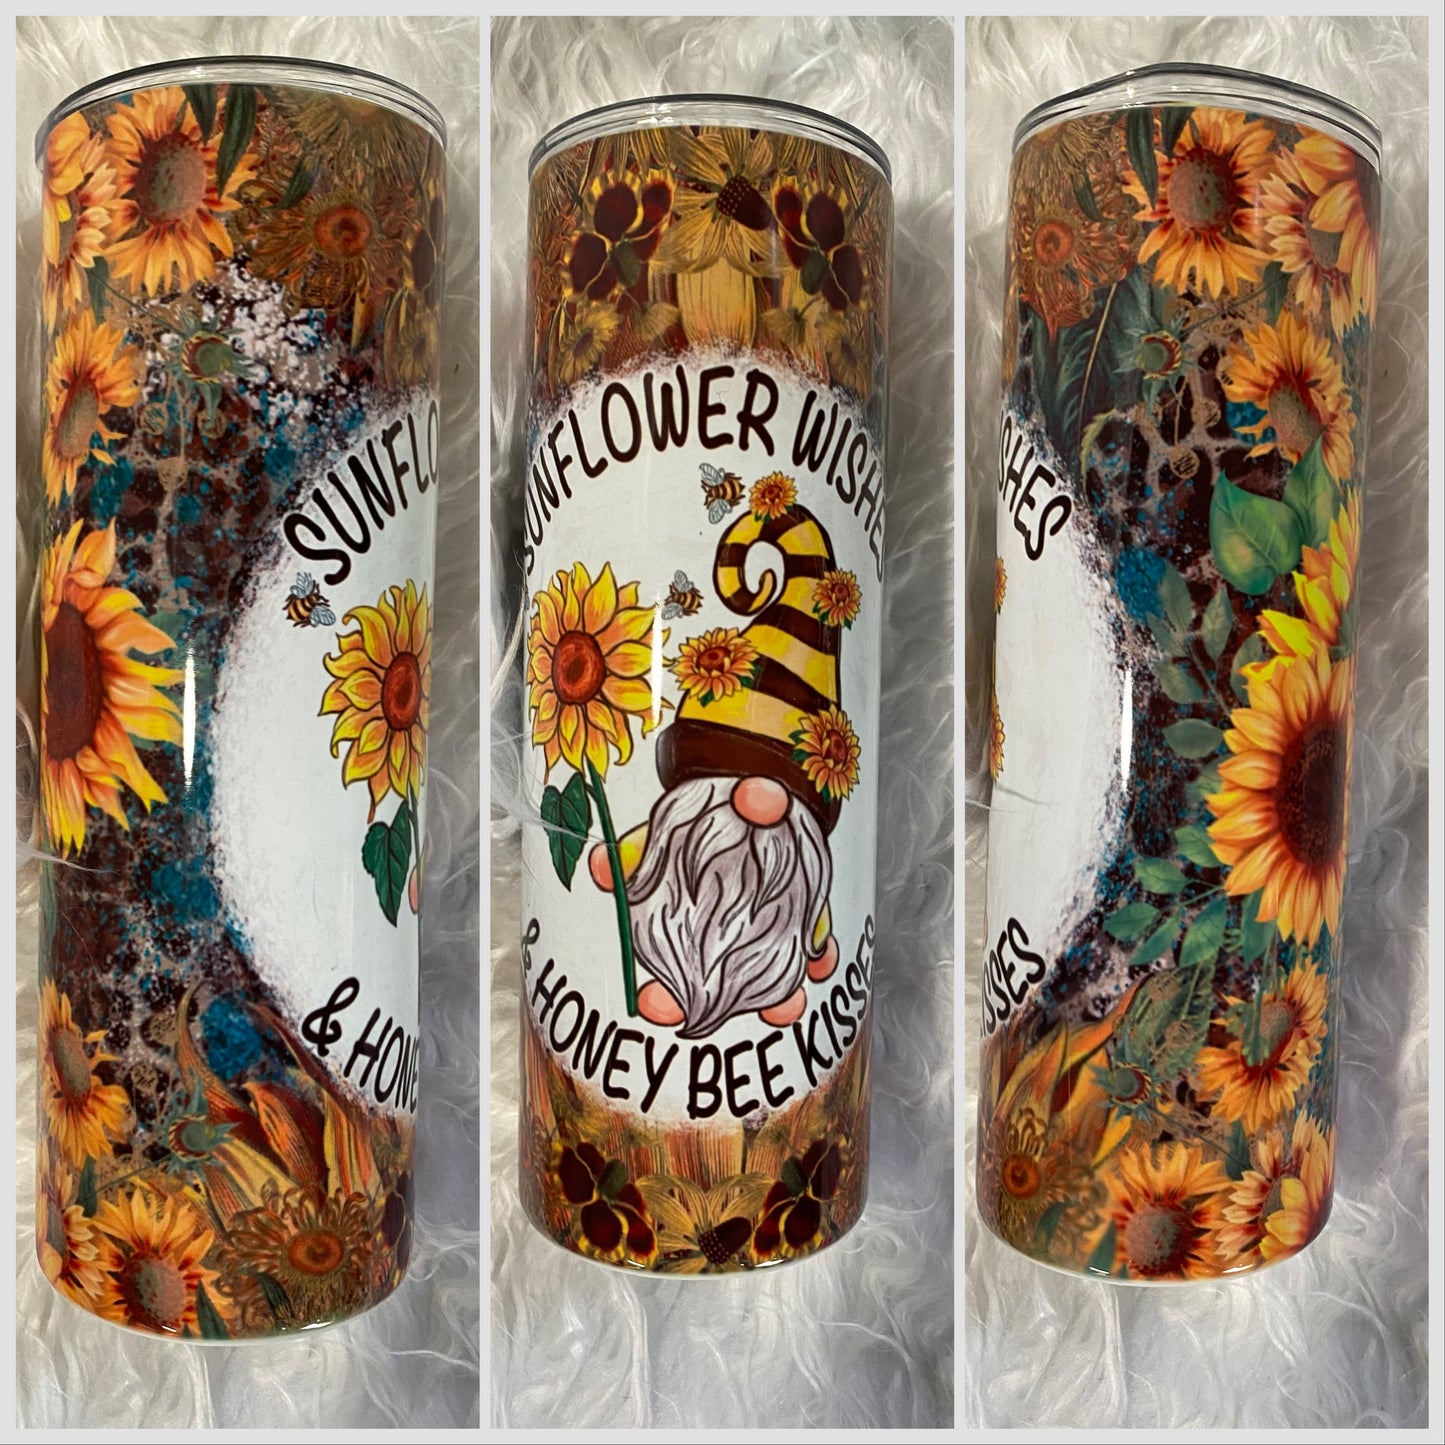 Sunflower wishes &honeybee kisses